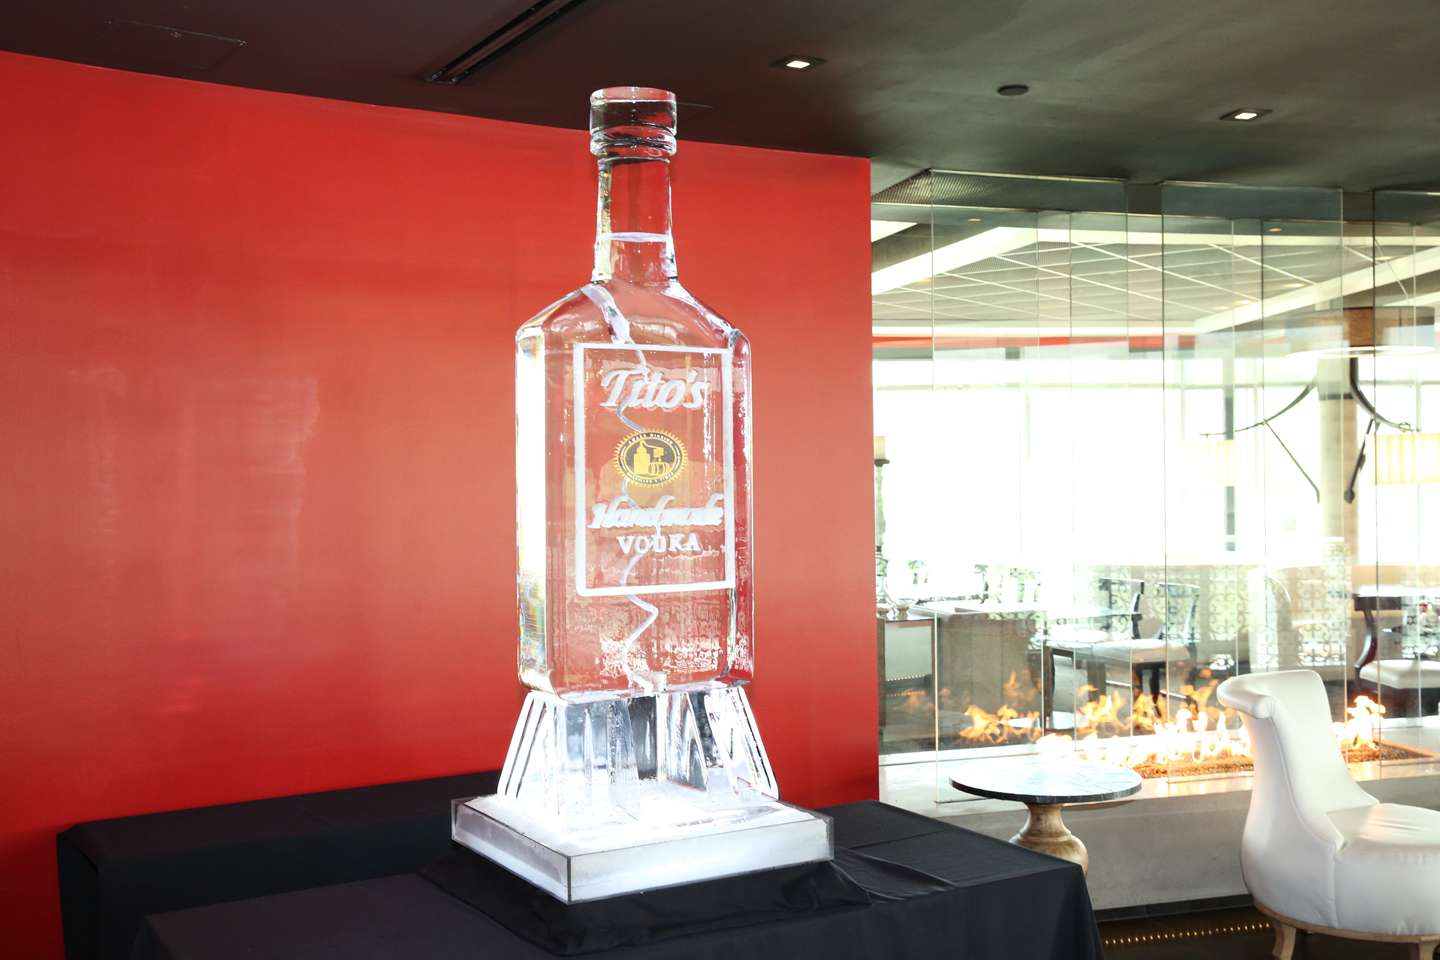 A huge bottle of Titos Handmade Vodka